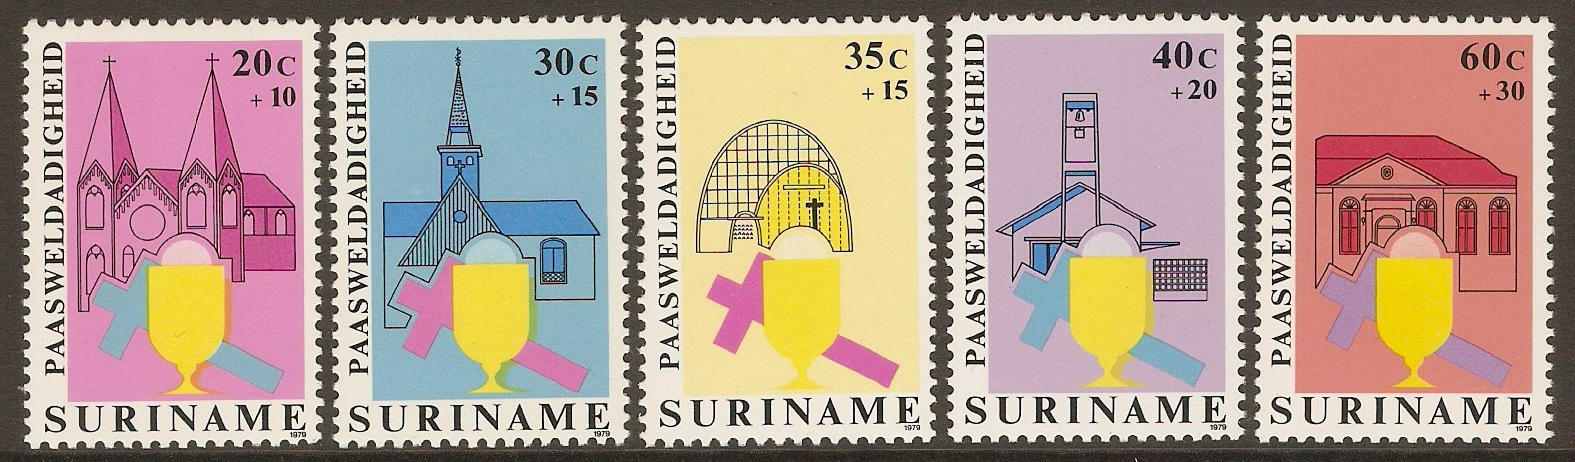 Surinam 1979 Easter Charity set. SG957-SG961.